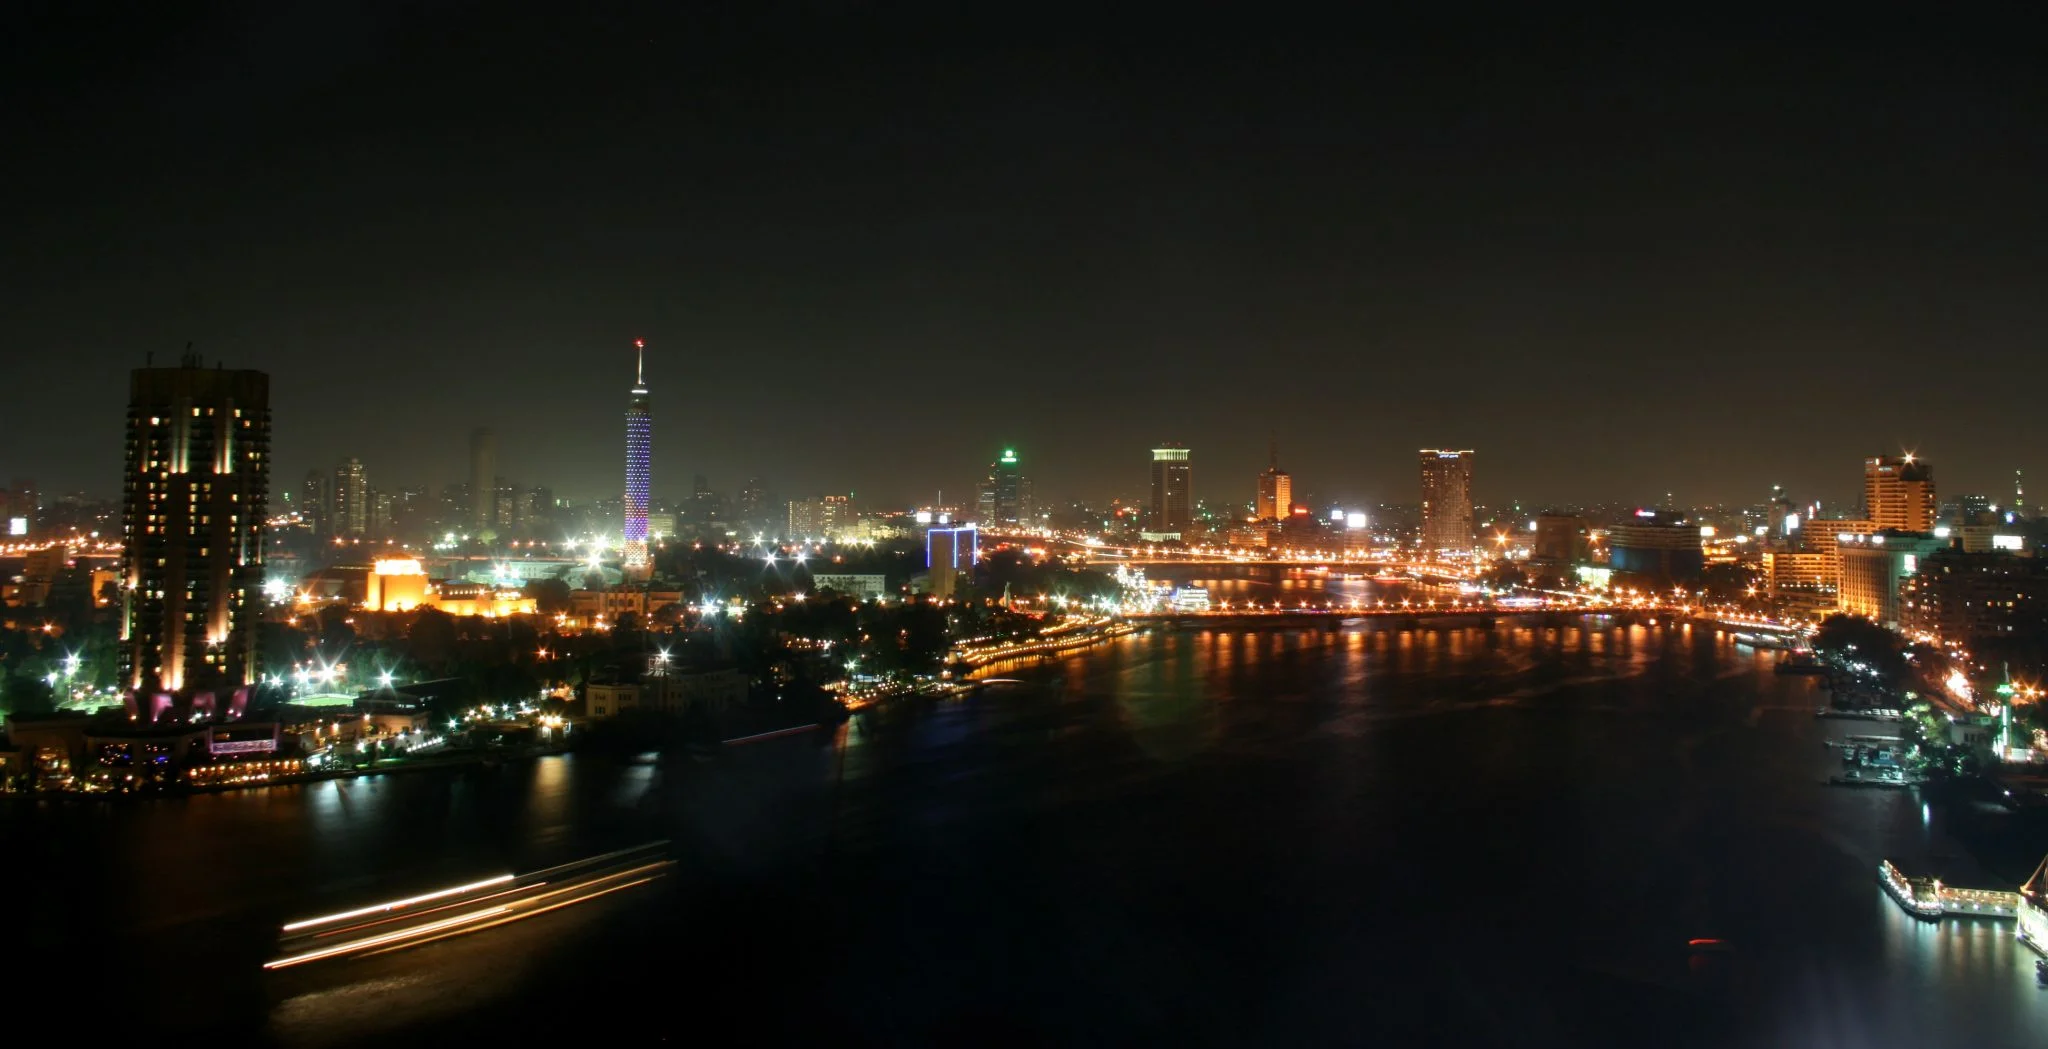 cairo, egypt at night